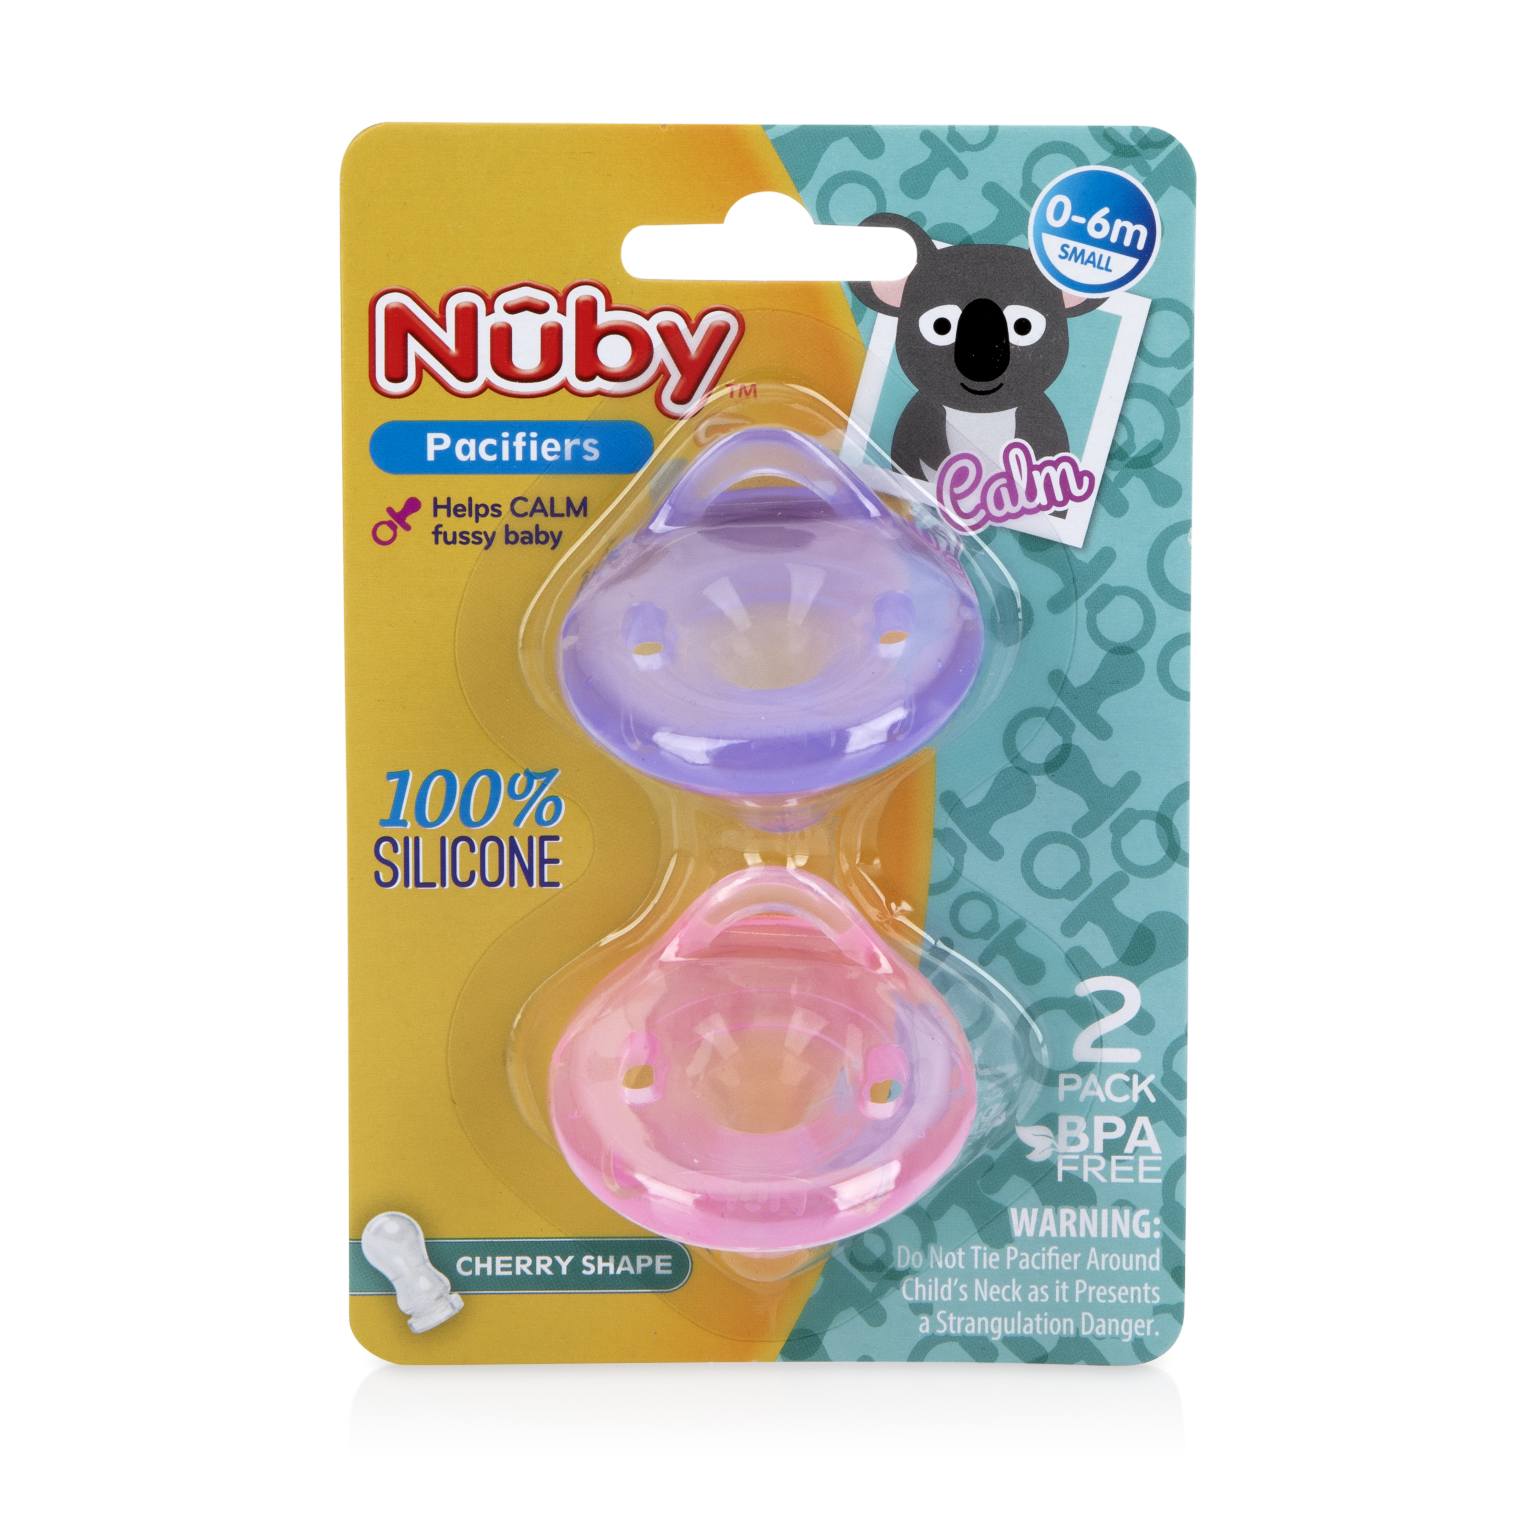 Nuby 6-Piece Medical Kit